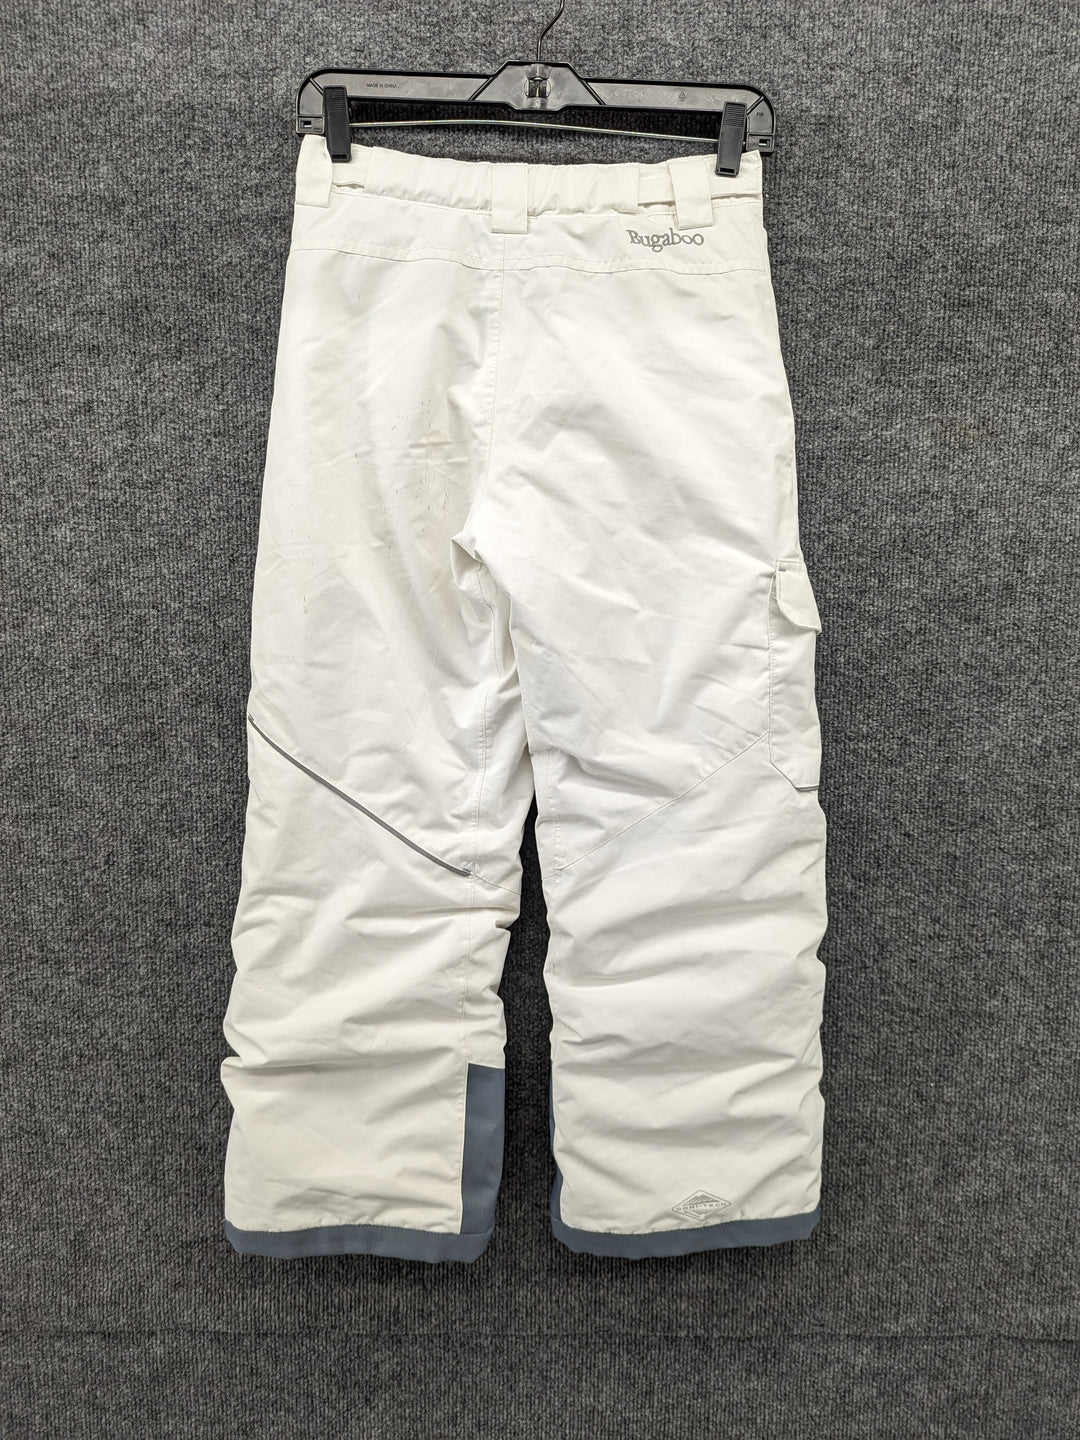 Columbia Size Y Medium Youth Ski Pants